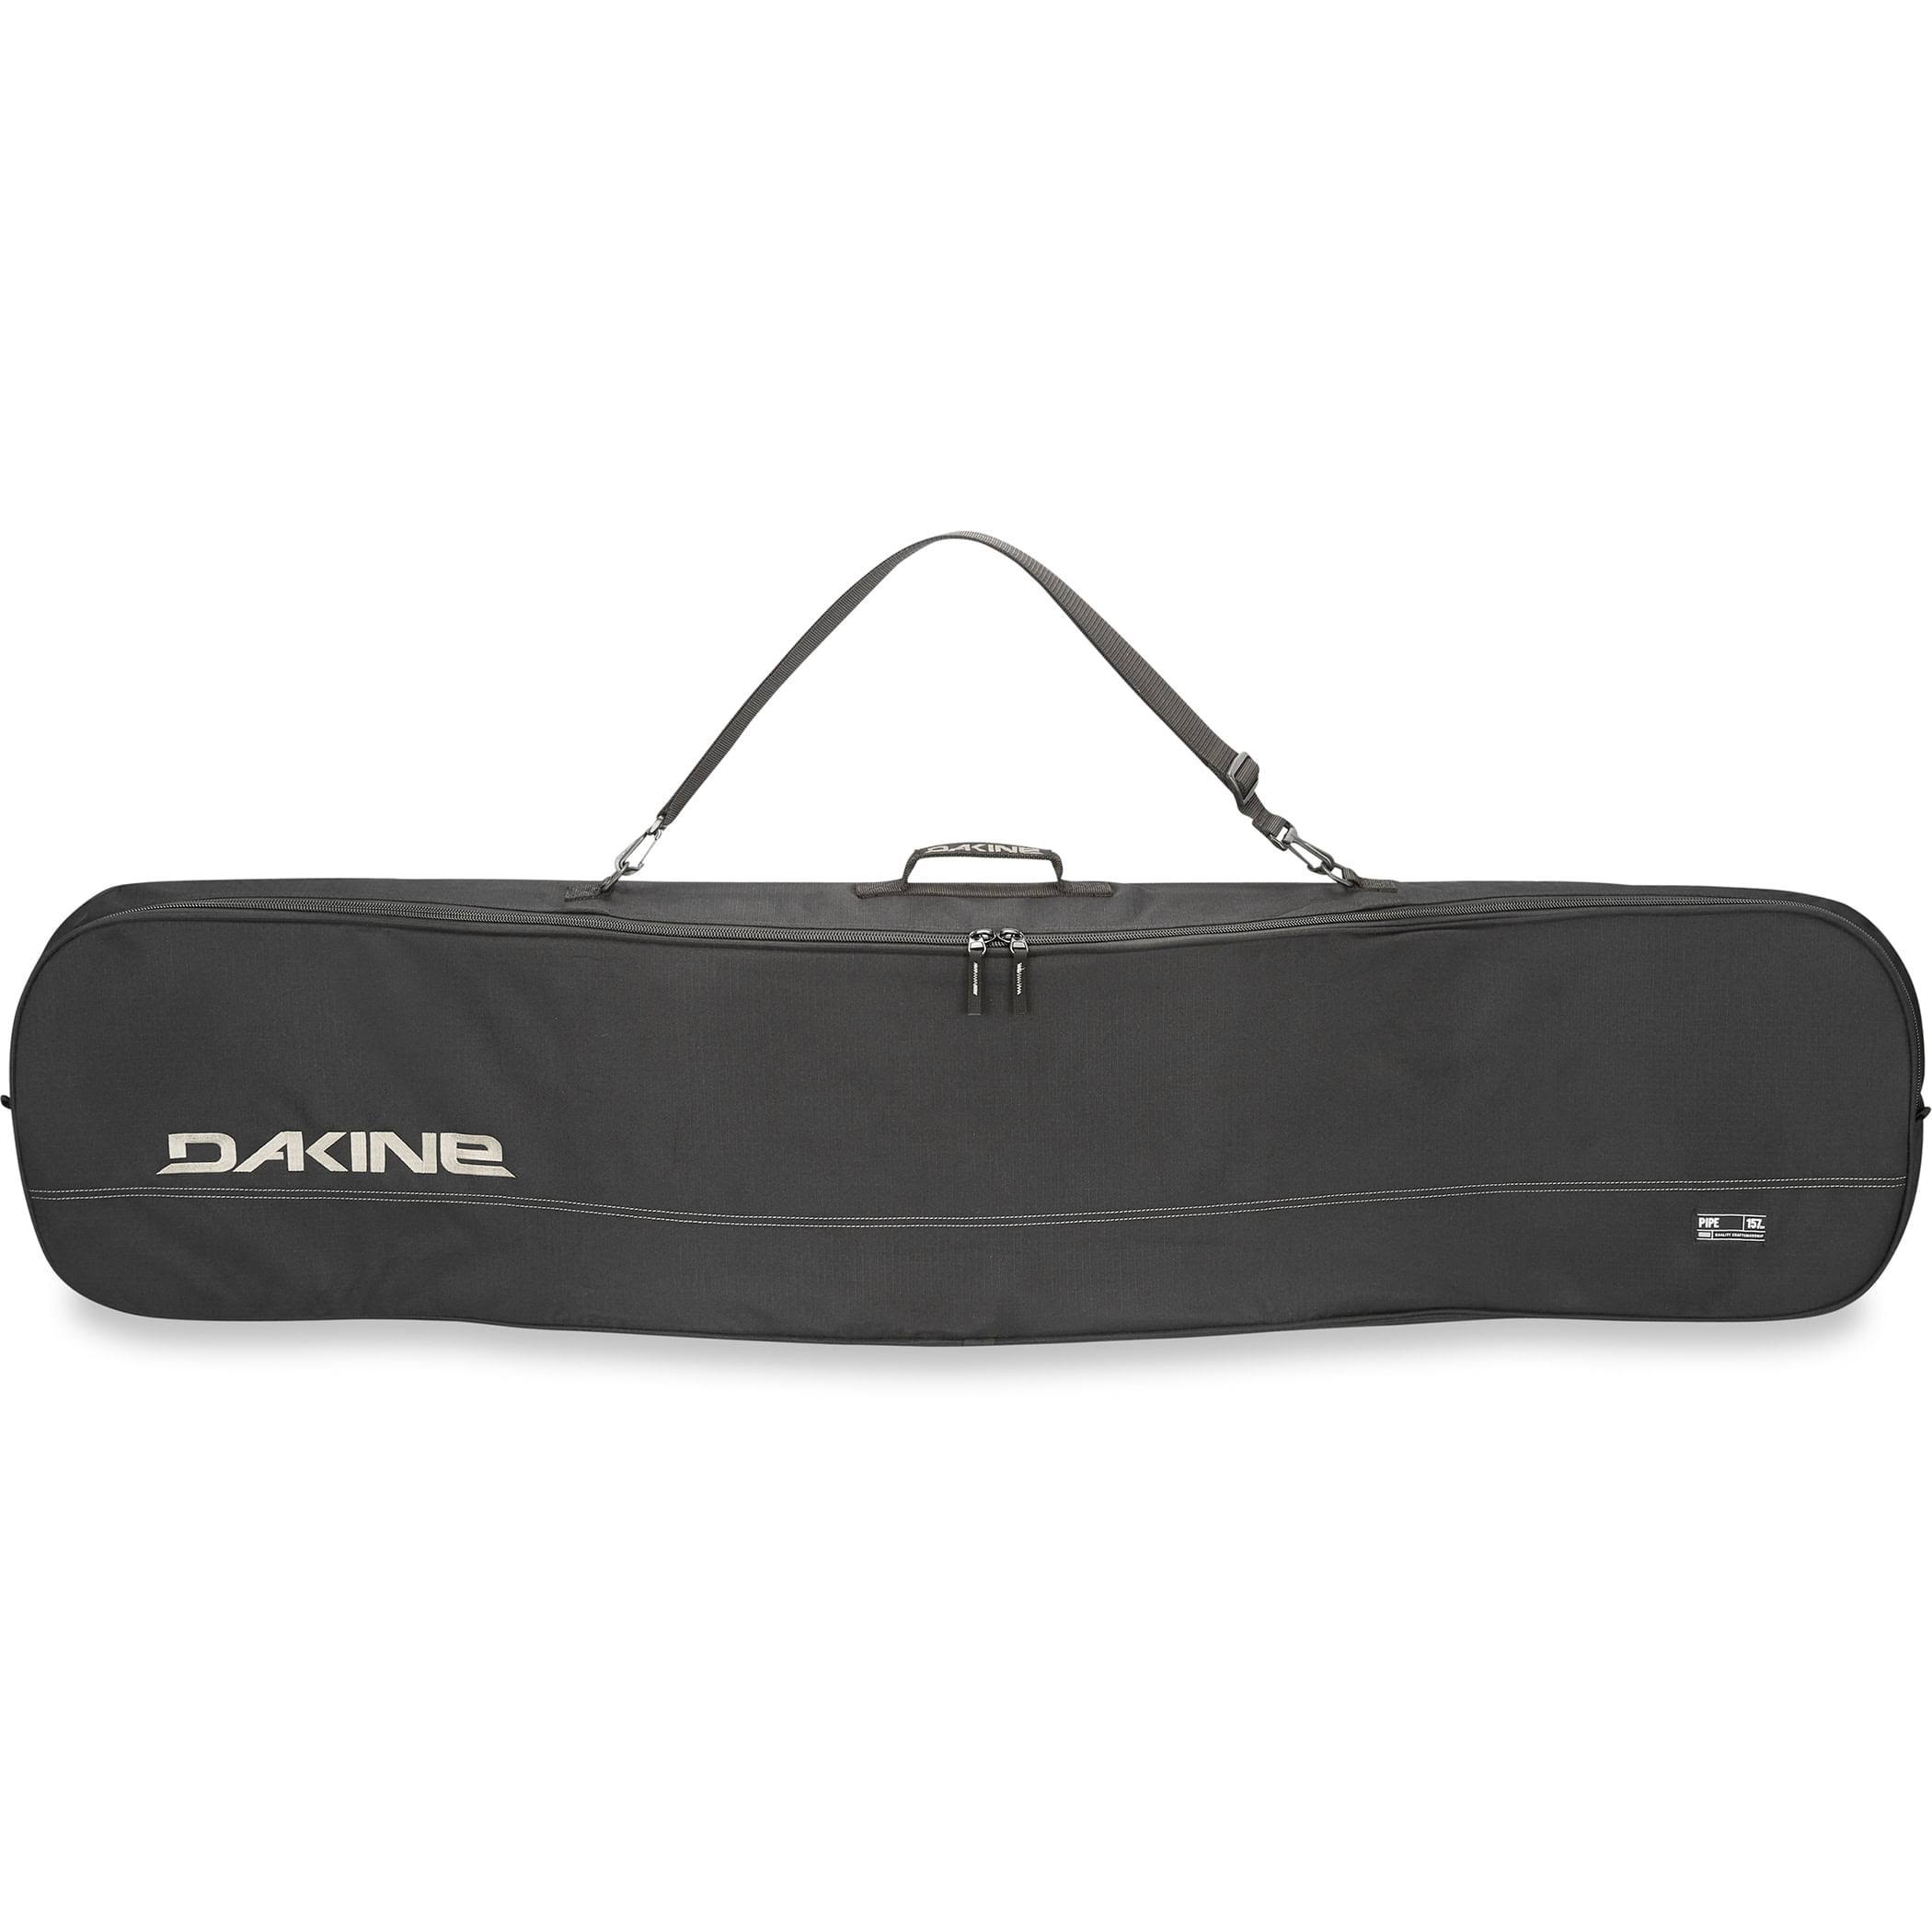 Dakine Unisex Pipe Snowboard Bag - Black, 157cm